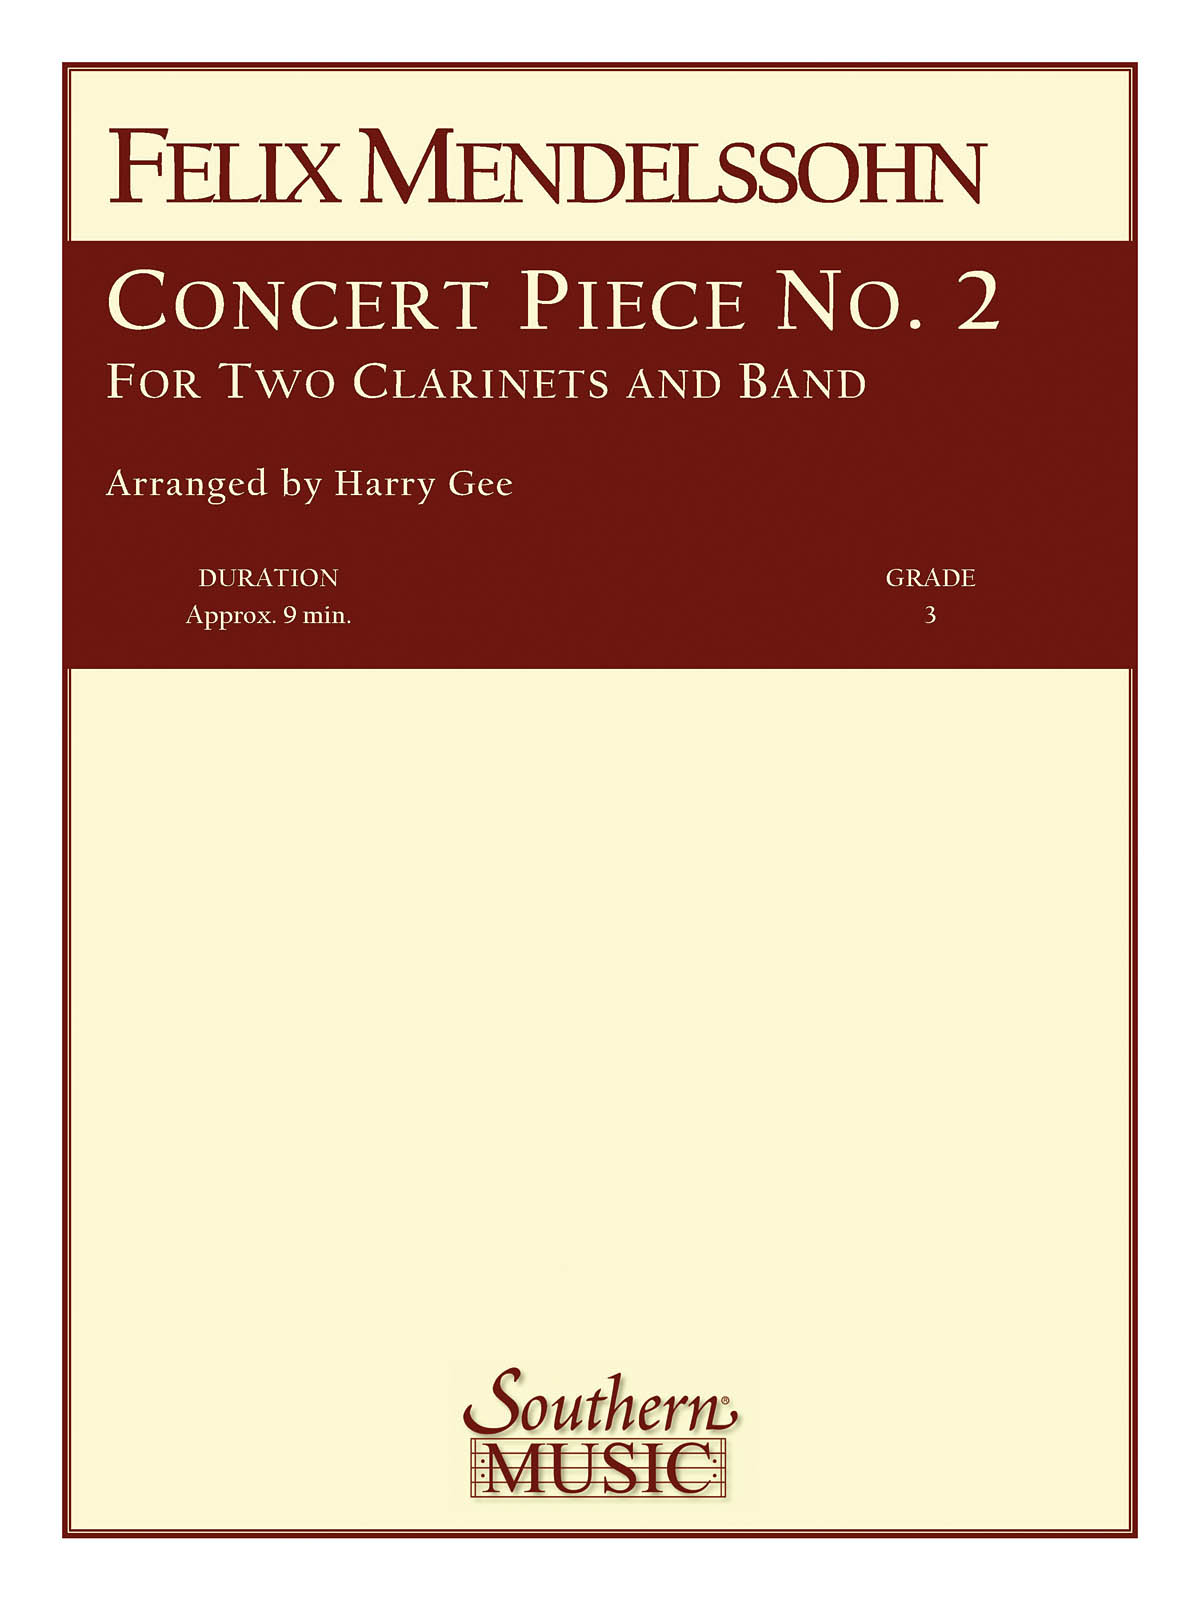 Felix Mendelssohn Bartholdy: Concert Piece No. 2 Concertpiece: Concert Band: